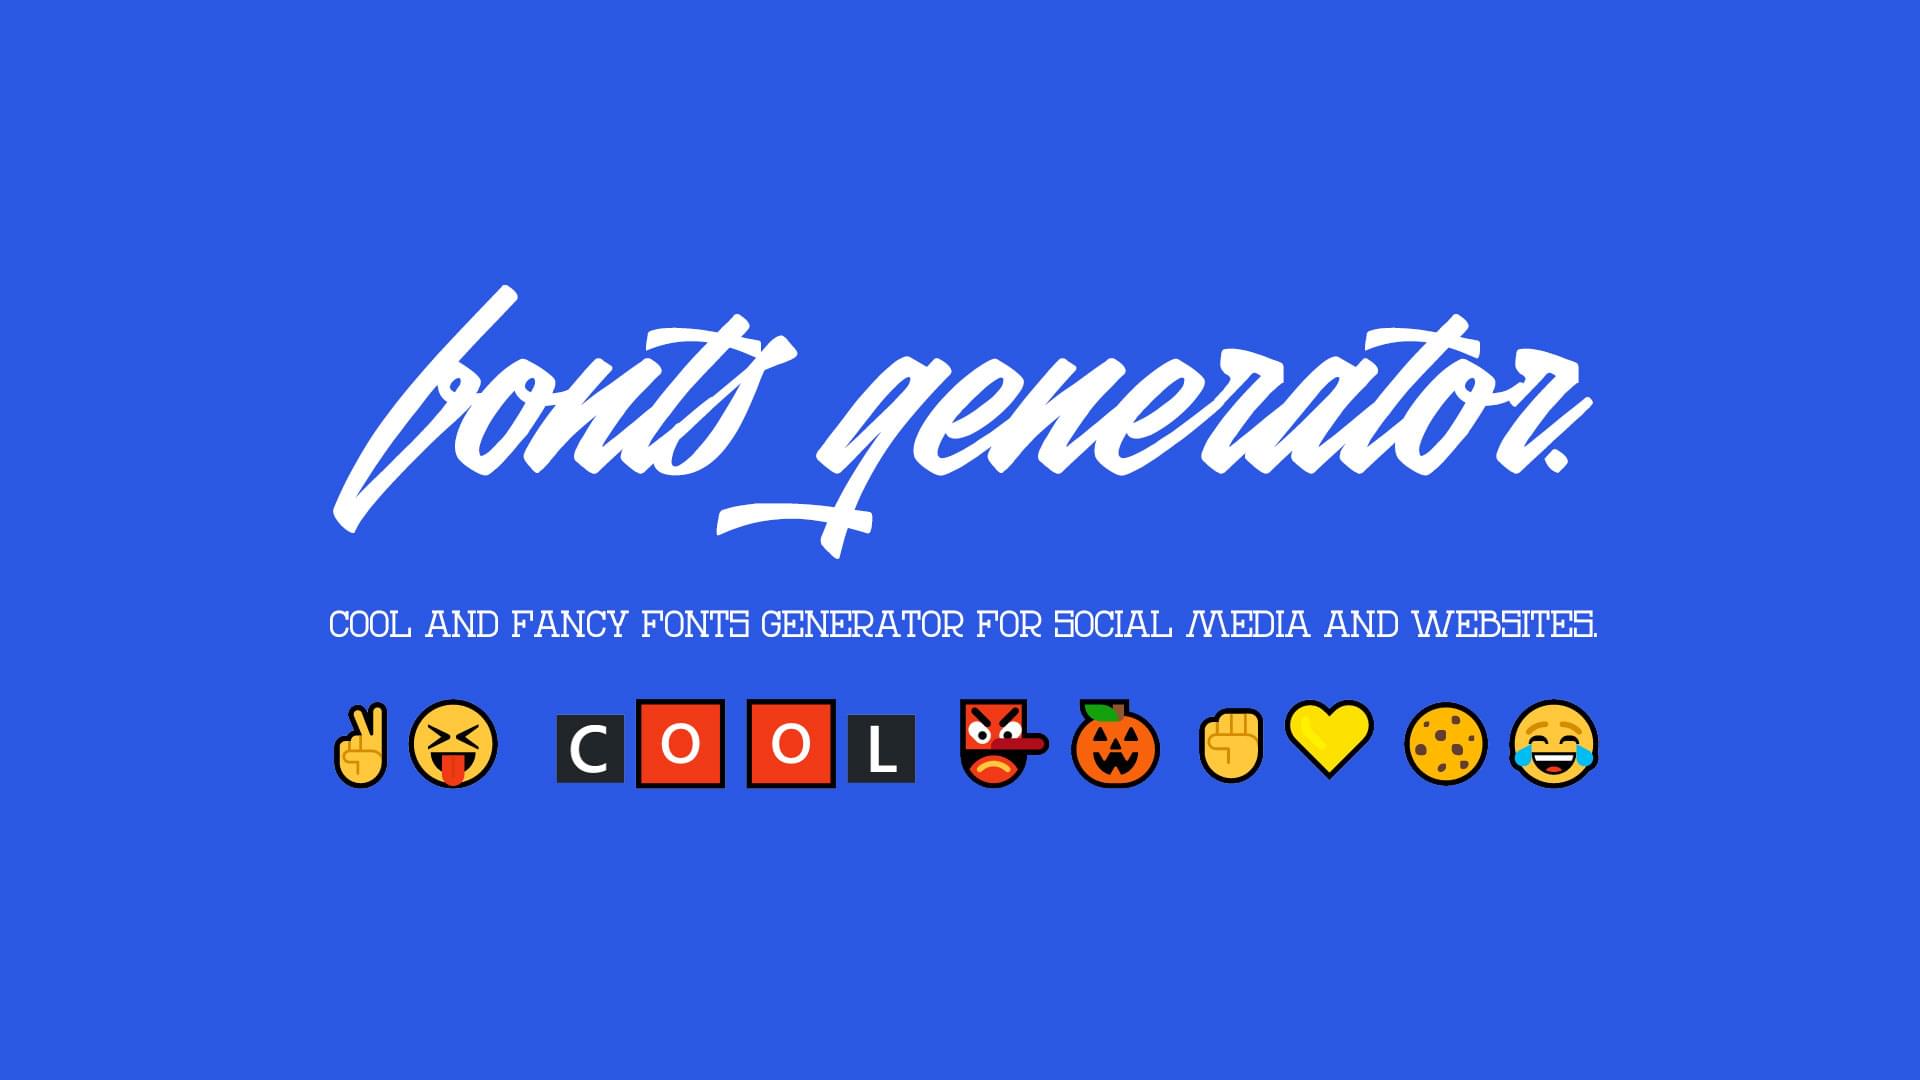 Attend slack secondary Fonts Generator 𝖈𝖔𝖕𝖞 𝖆𝖓𝖉 𝖕𝖆𝖘𝖙𝖊 | Emoji Symbols and Lenny Faces